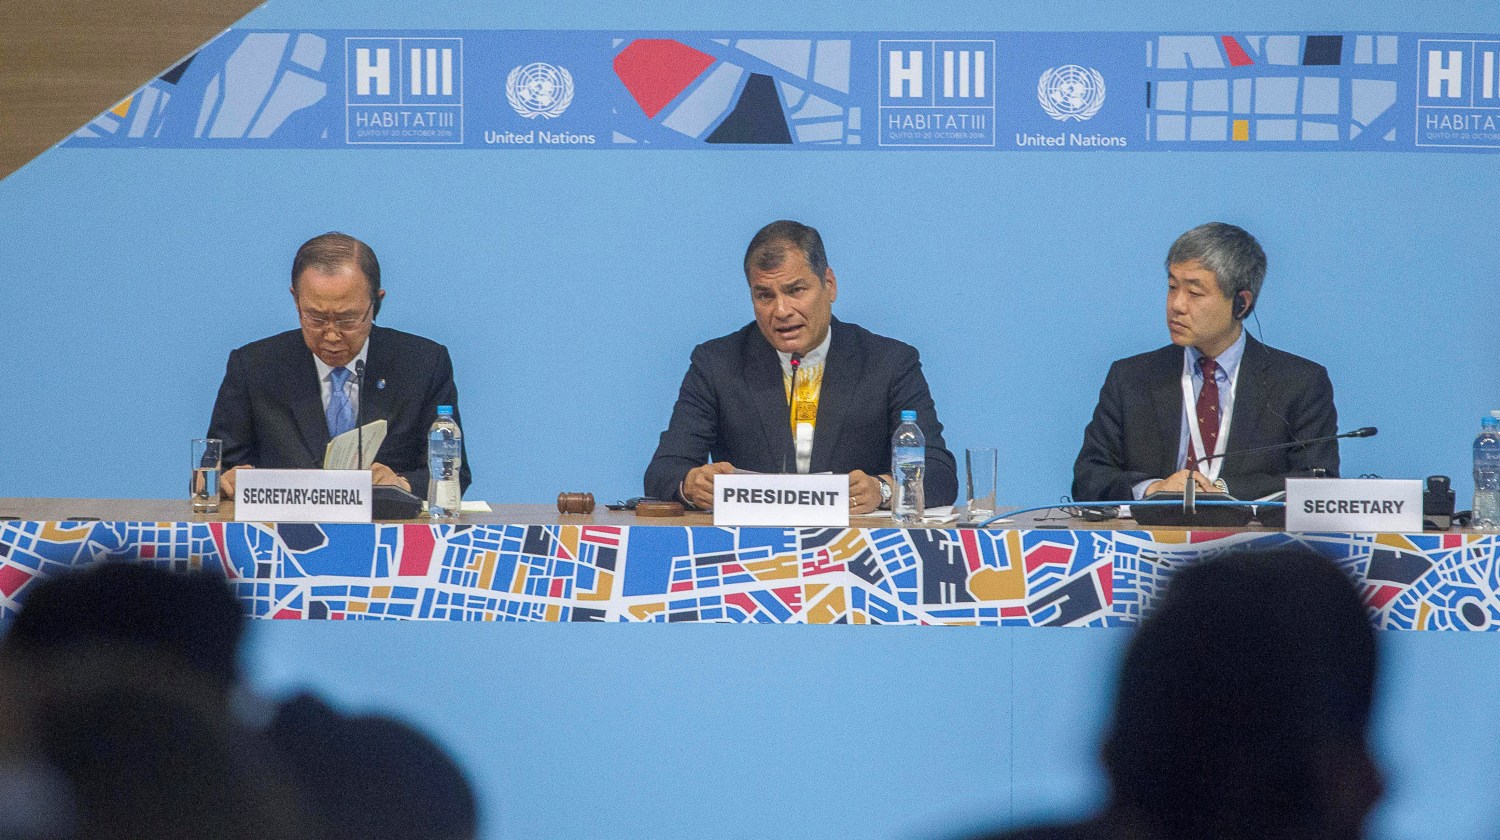 (L-R) Secretary General of UN Ban Ki-moon, Ecuadorean President Rafael Correa and Secretary General of UN Habitat III conference Joan Clos attend a ceremony at the Habitat III headquarters in Quito, October 17, 2016. REUTERS/Guillermo Granja - RTX2P8F5